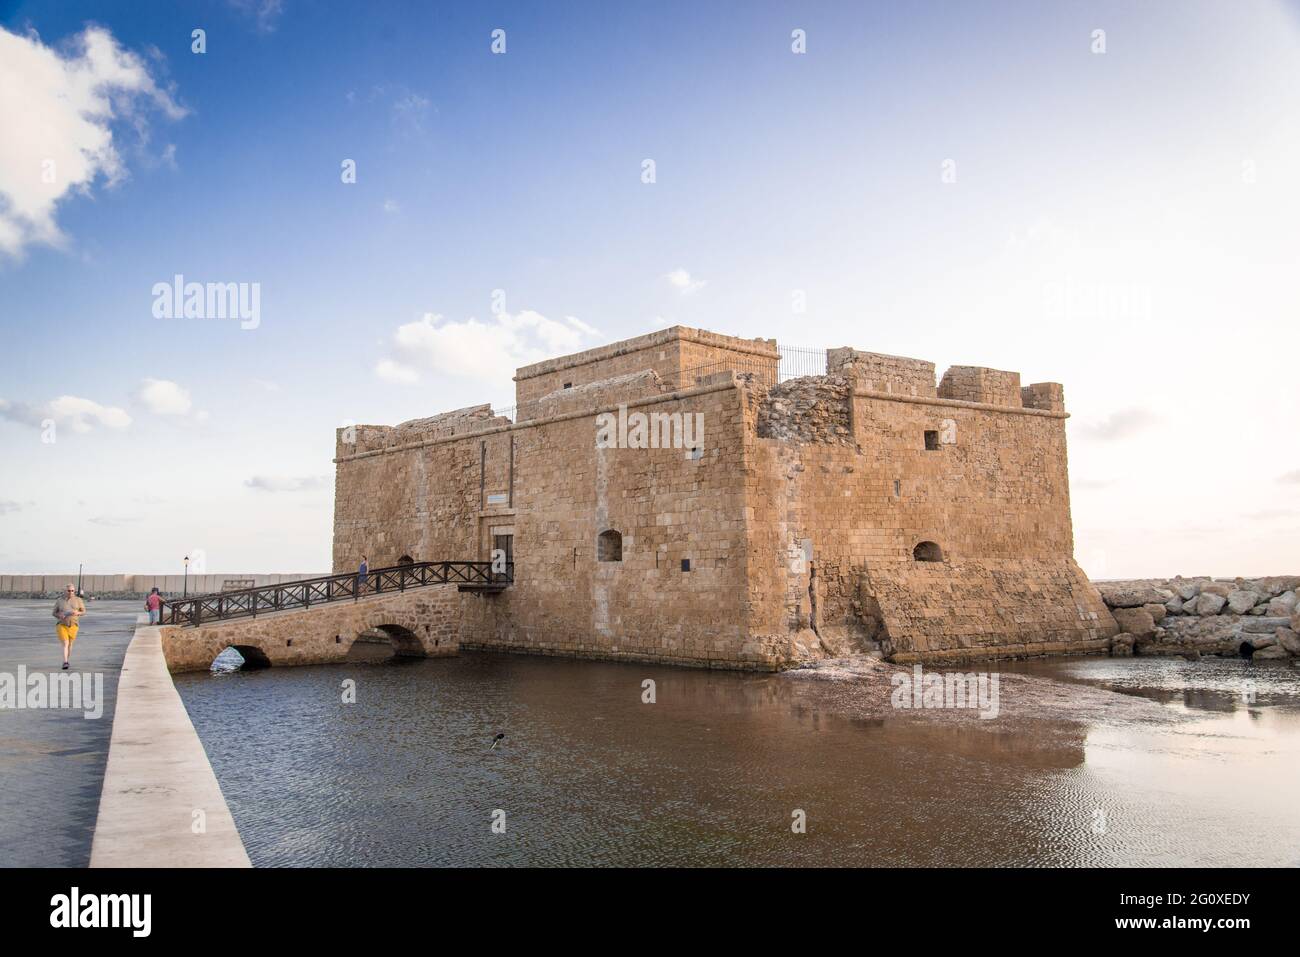 Das mittelalterliche Kastell bewachte einst die Hafeneinfahrt von Paphos. - The medieval castle once guarded the entrance to the harbour of Paphos. Stock Photo